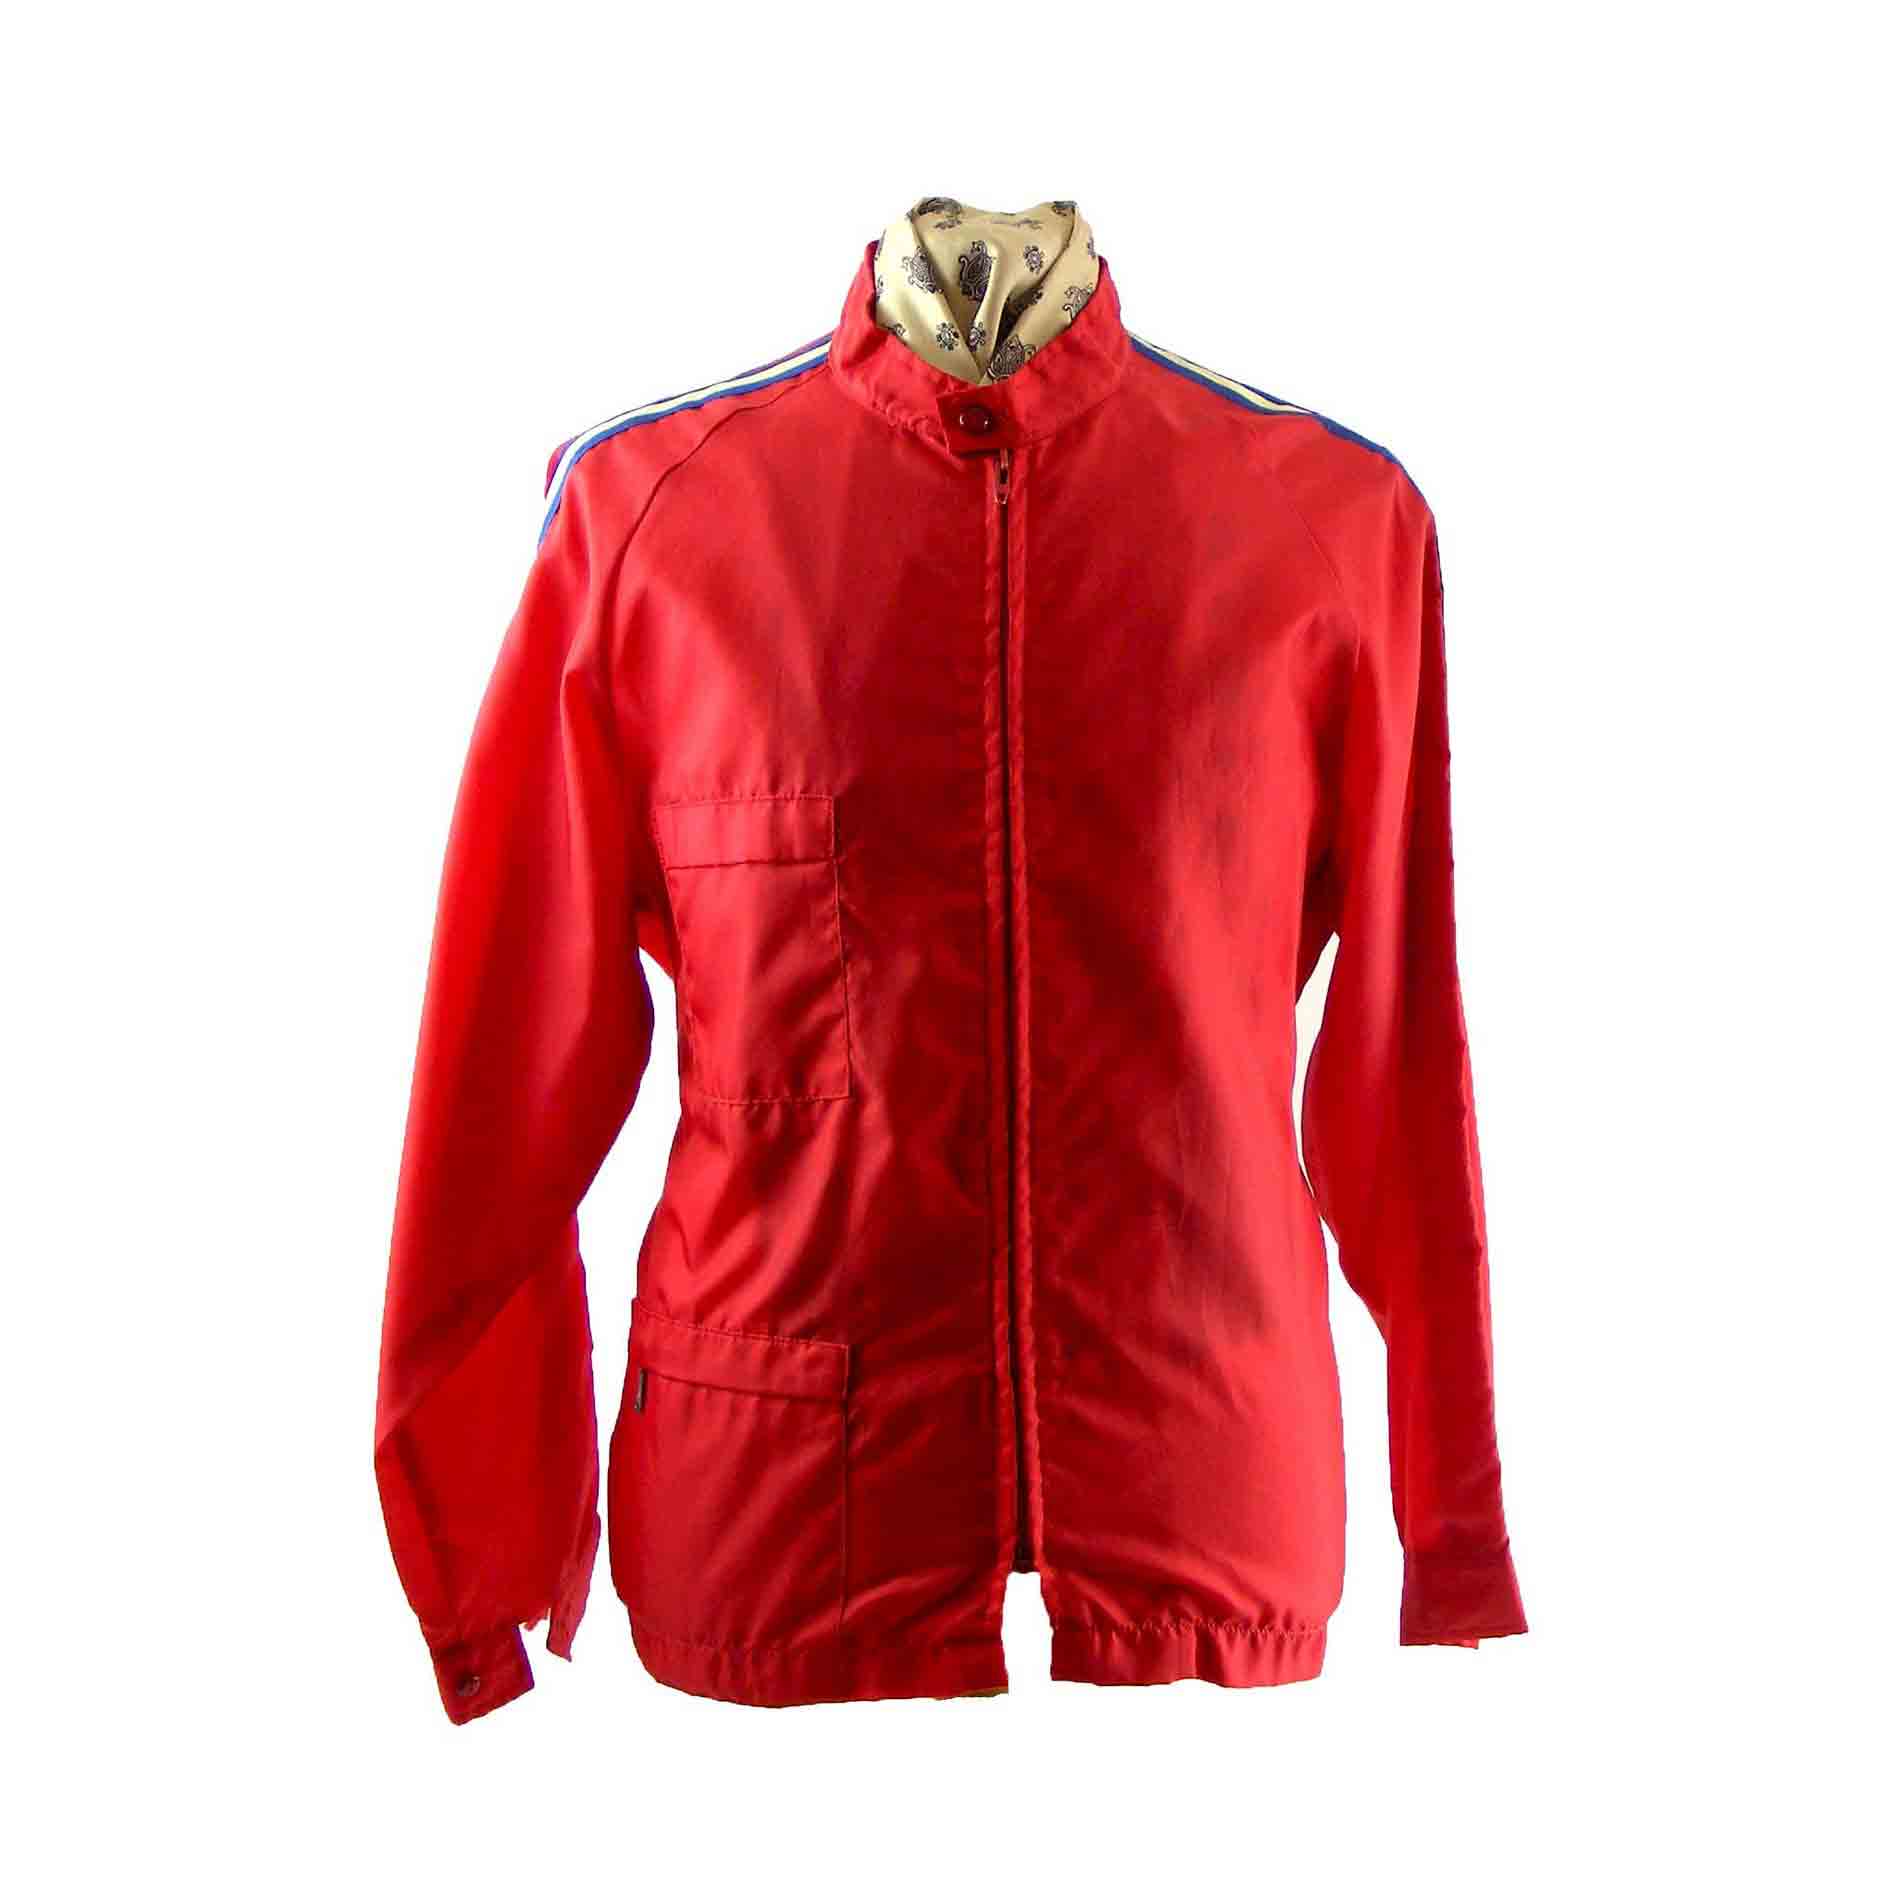 Red 1980s racing jacket - Blue 17 Vintage Clothing